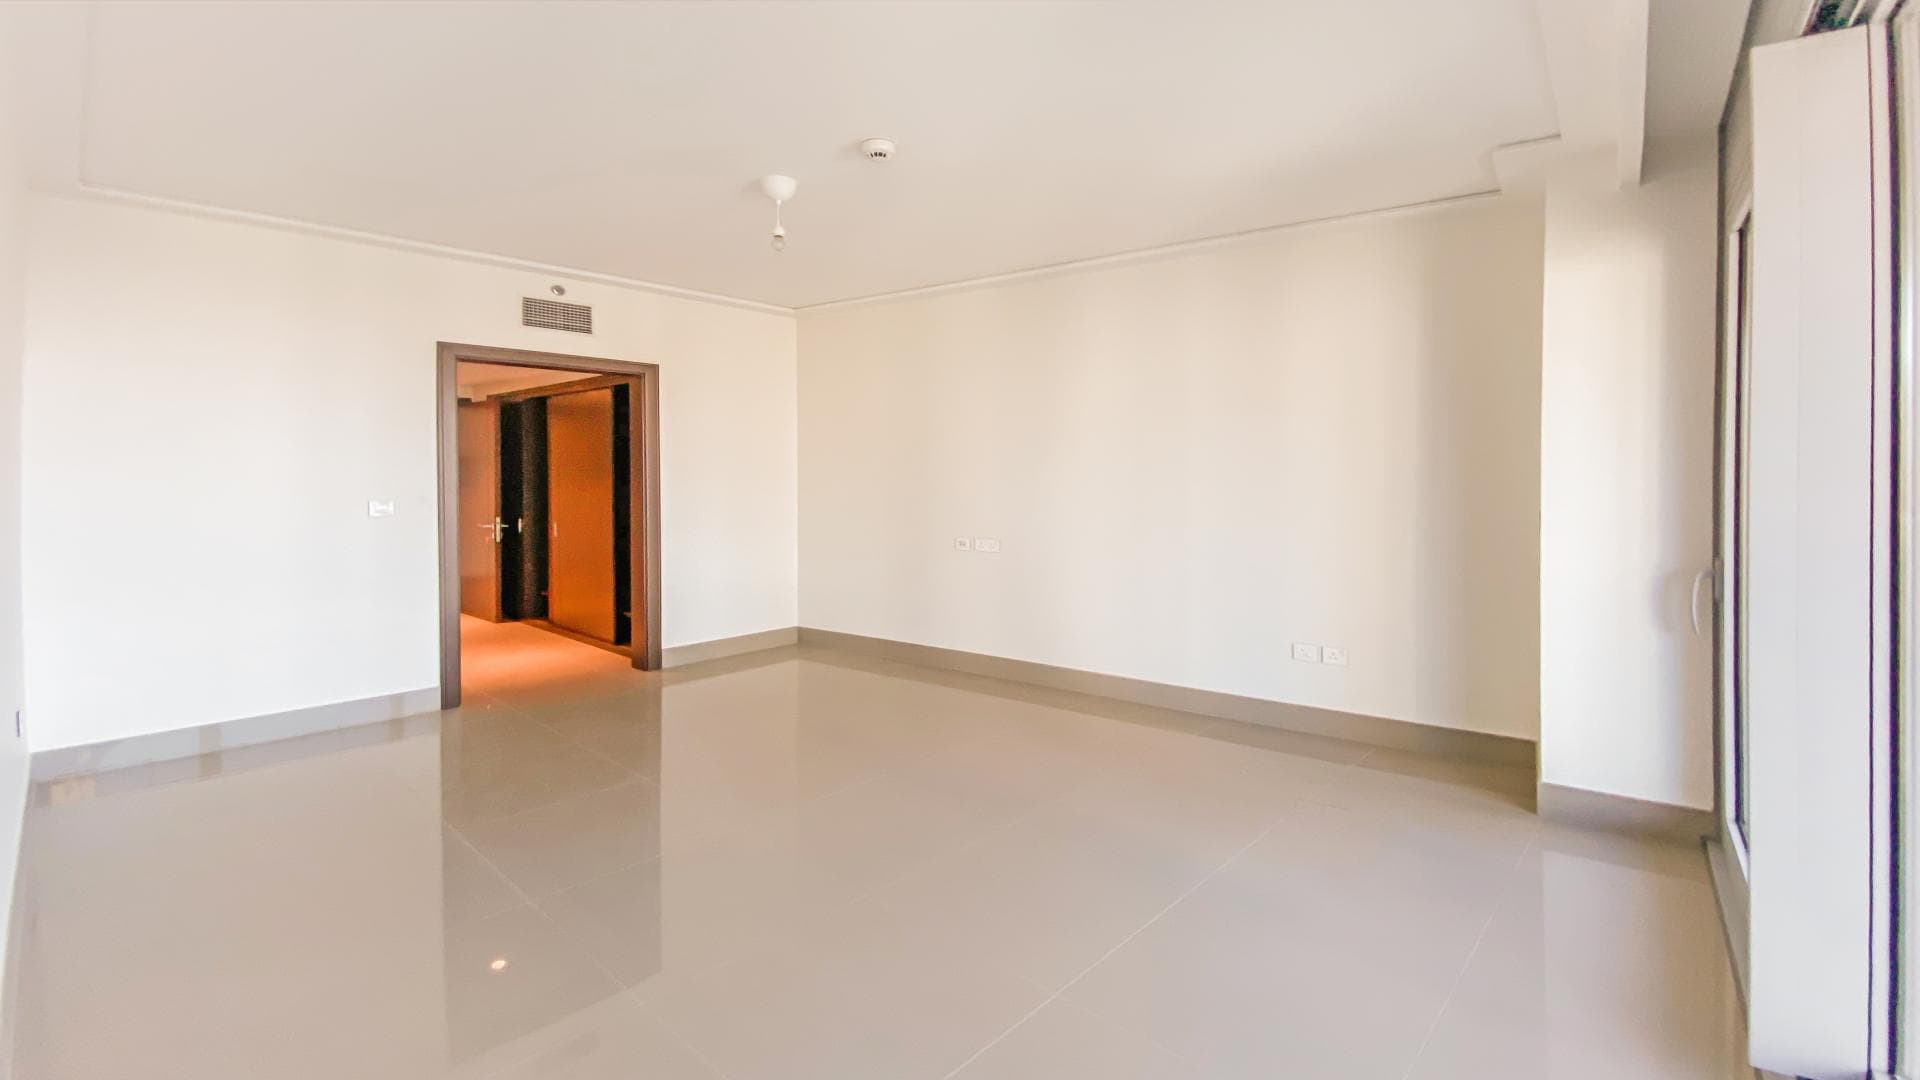 2 Bedroom Apartment For Rent Burj Khalifa Area Lp12882 1650b38dfd80da00.jpg